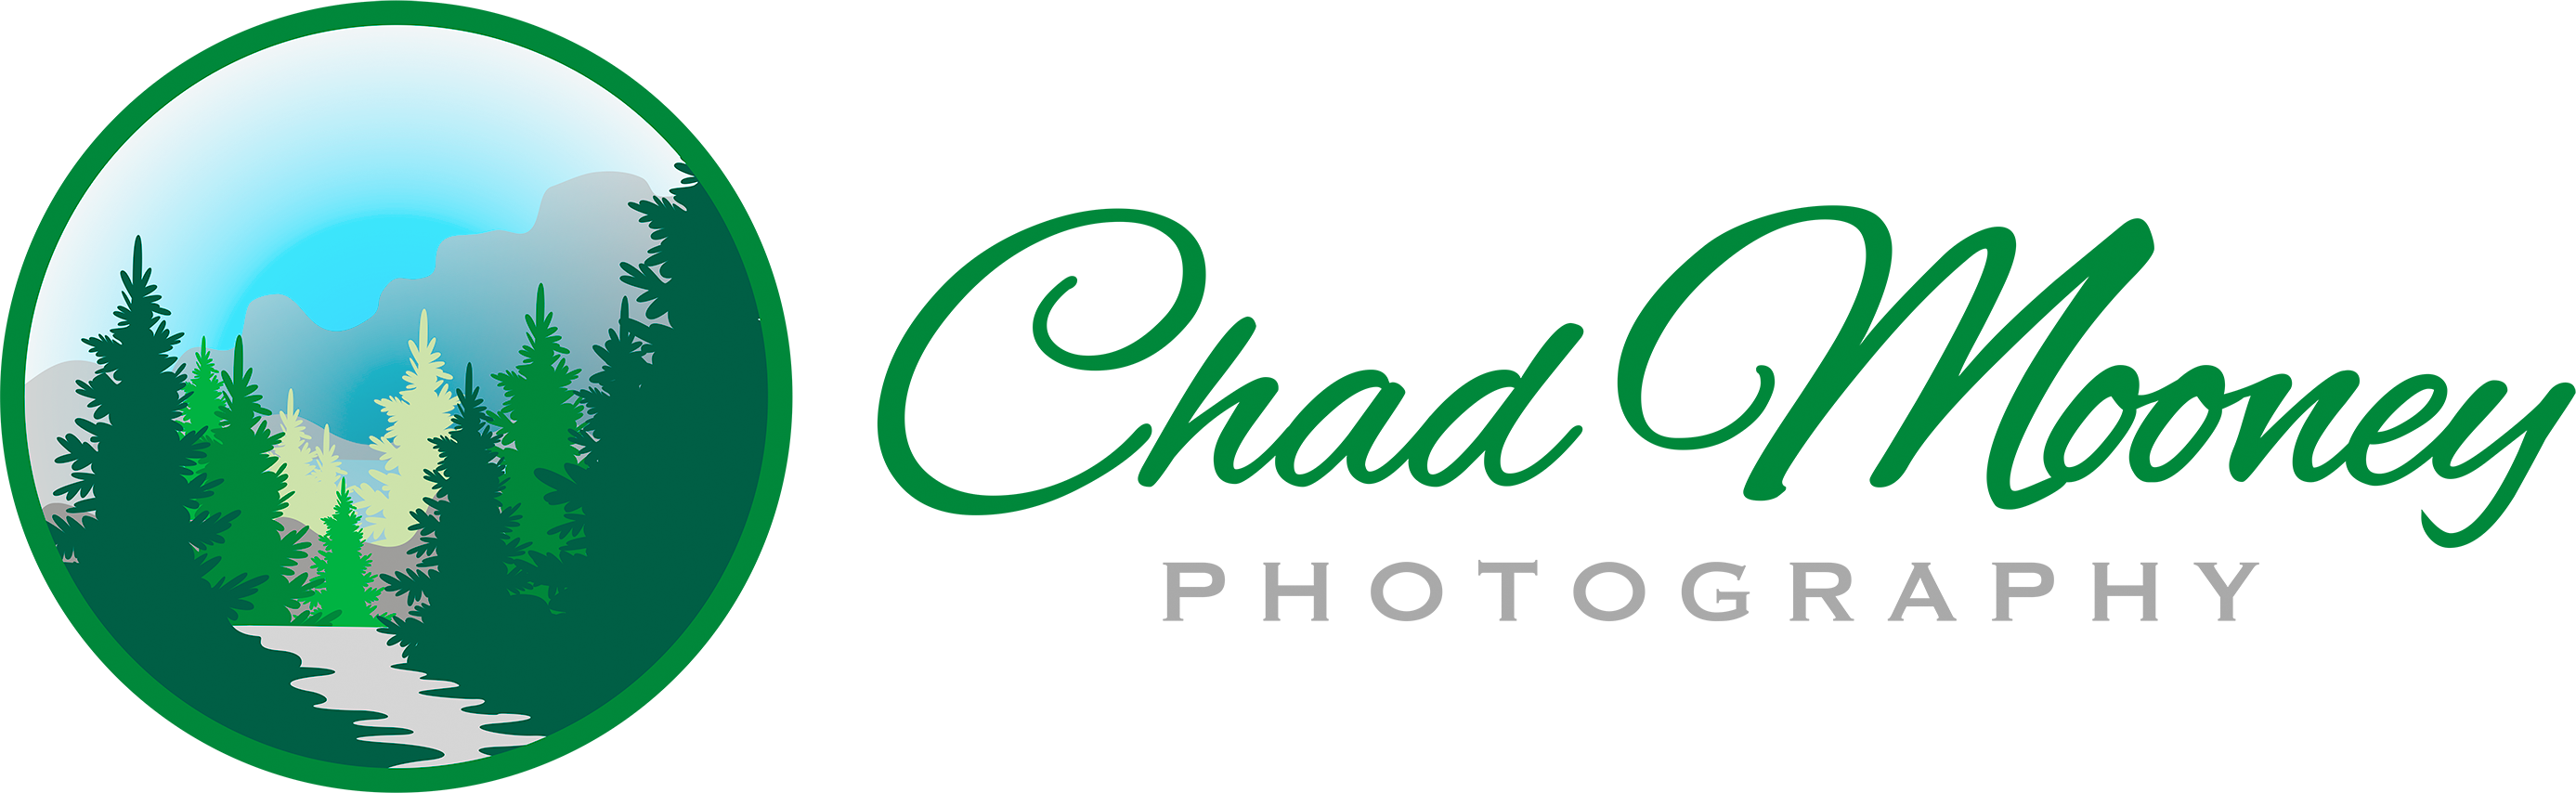 Chad Mooney Photography